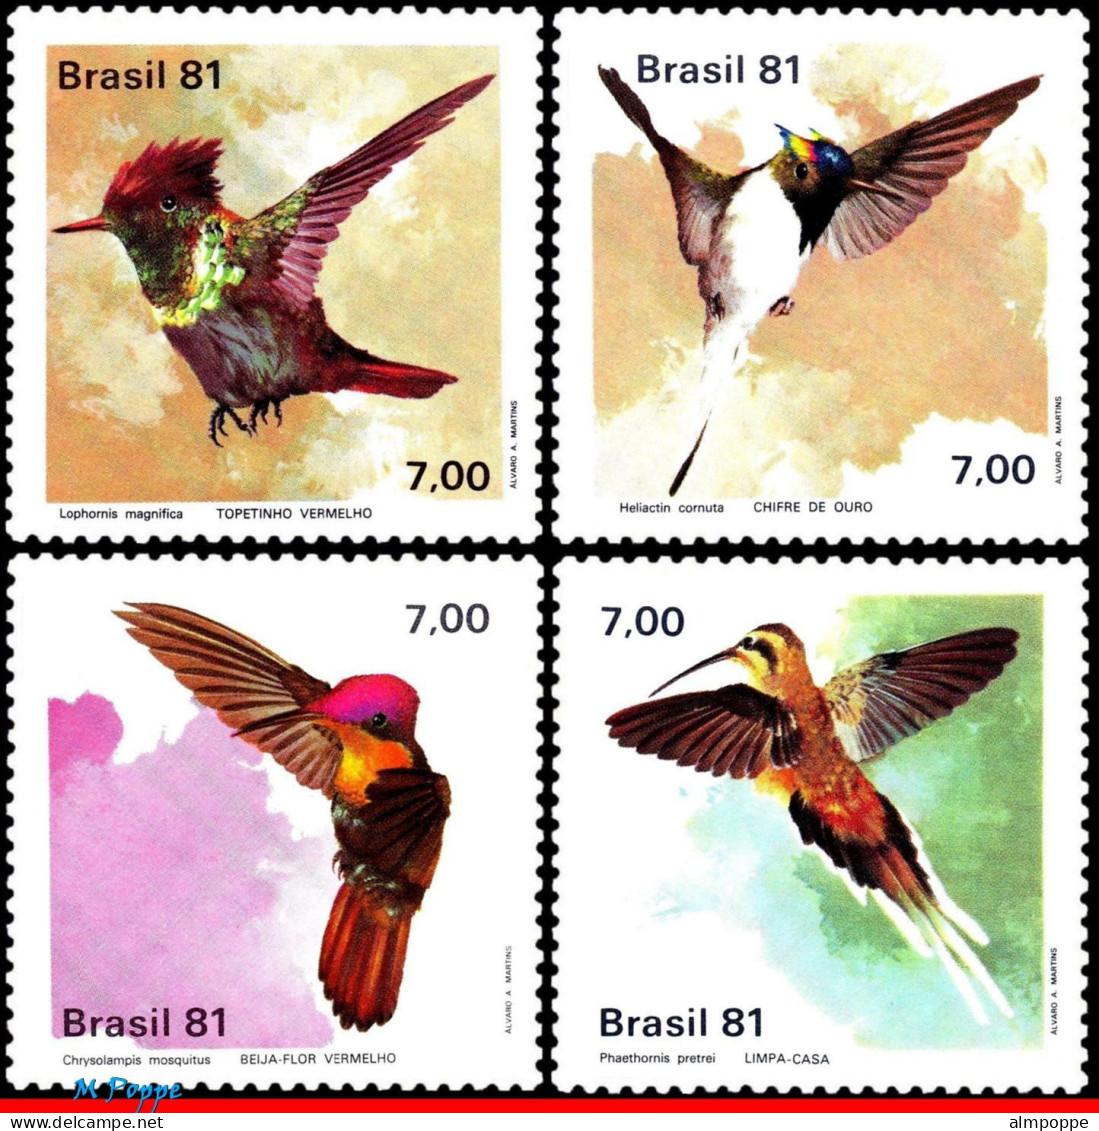 Ref. BR-1739-42 BRAZIL 1981 - HUMMINGBIRDS, ANIMALS &FAUNA, MI# 1823-26, SET MNH, BIRDS 4V Sc# 1739-1742 - Unused Stamps